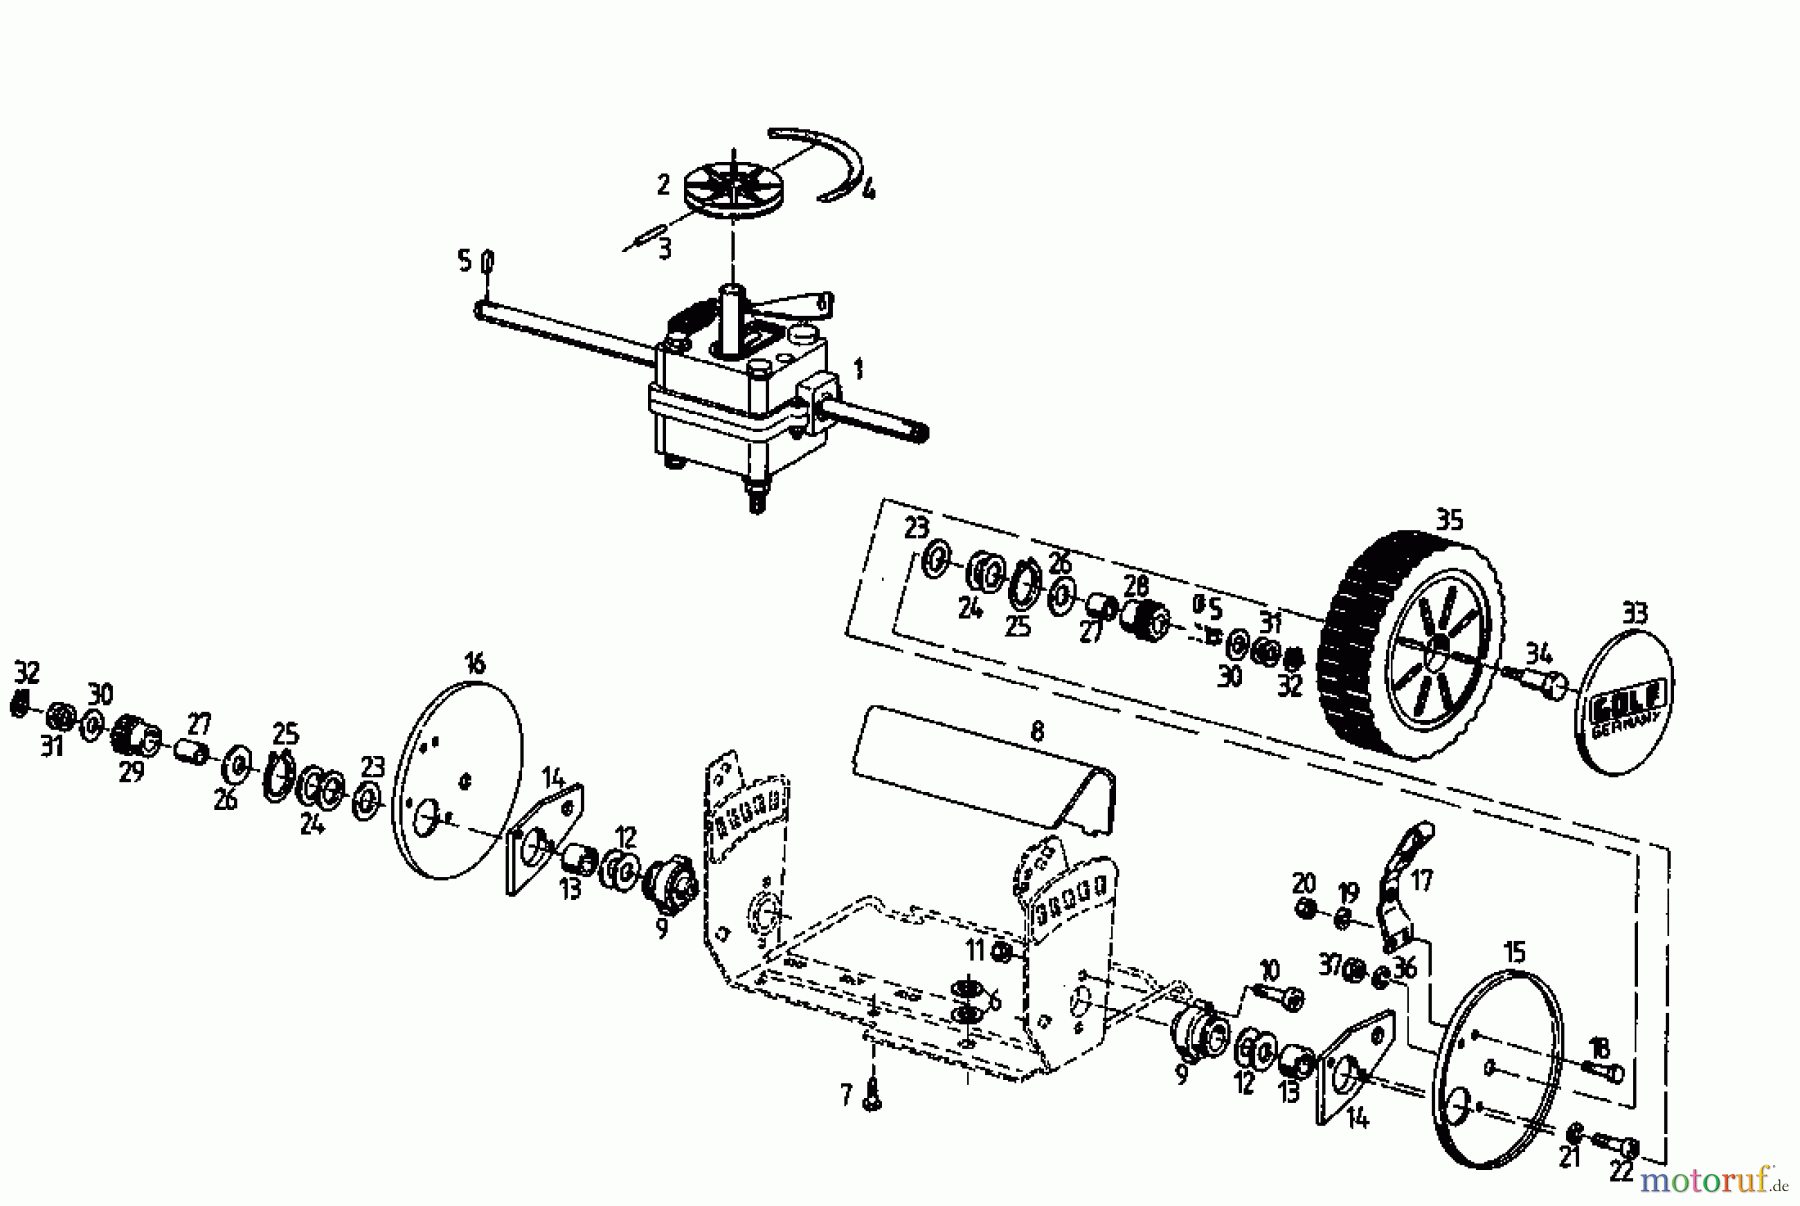  Golf Petrol mower self propelled Golf BRL 04033.01  (1995) Gearbox, Wheels, Cutting hight adjustment